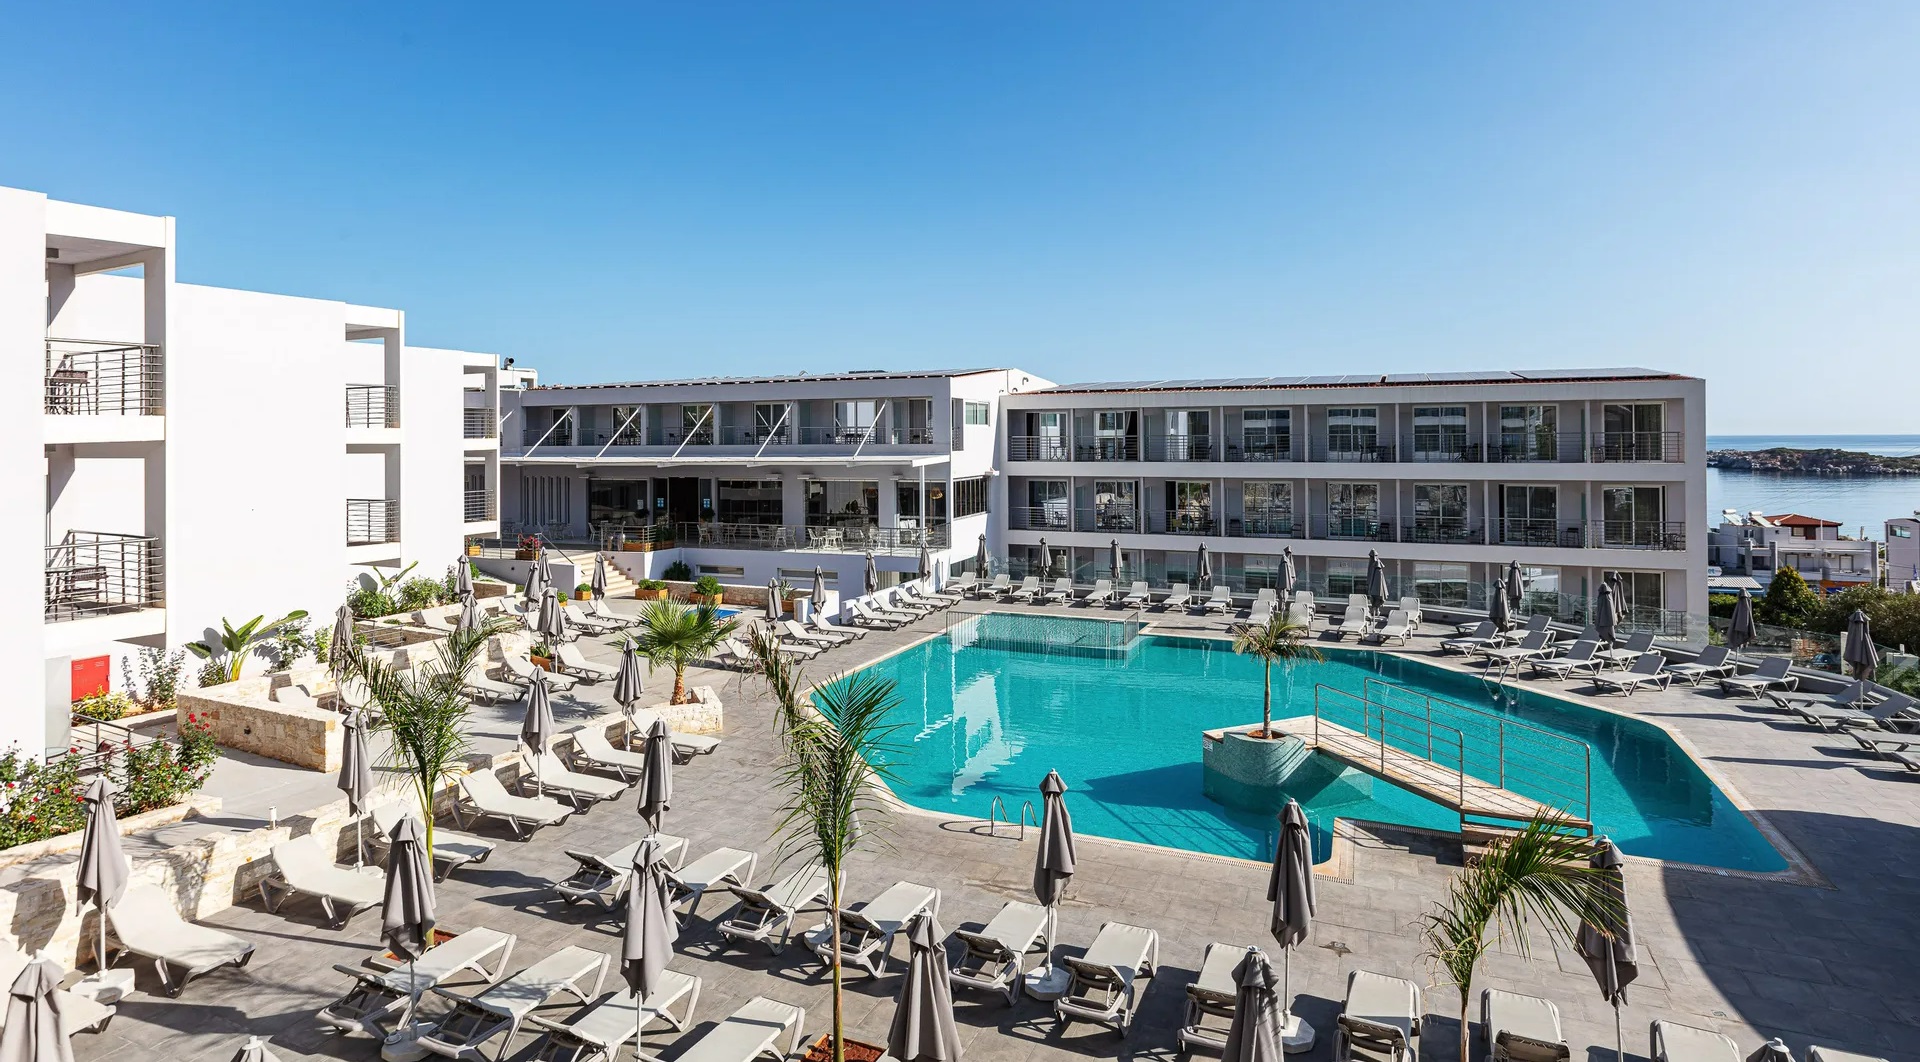 4* Atali Grand Resort - Μπαλί, Κρήτη ✦ 2 Ημέρες (1 Διανυκτέρευση) ✦ 2 άτομα + 1 παιδί έως και 12 ετών ✦ 2 ✦ έως 30/09/2022 ✦ Κοντά σε παραλία!